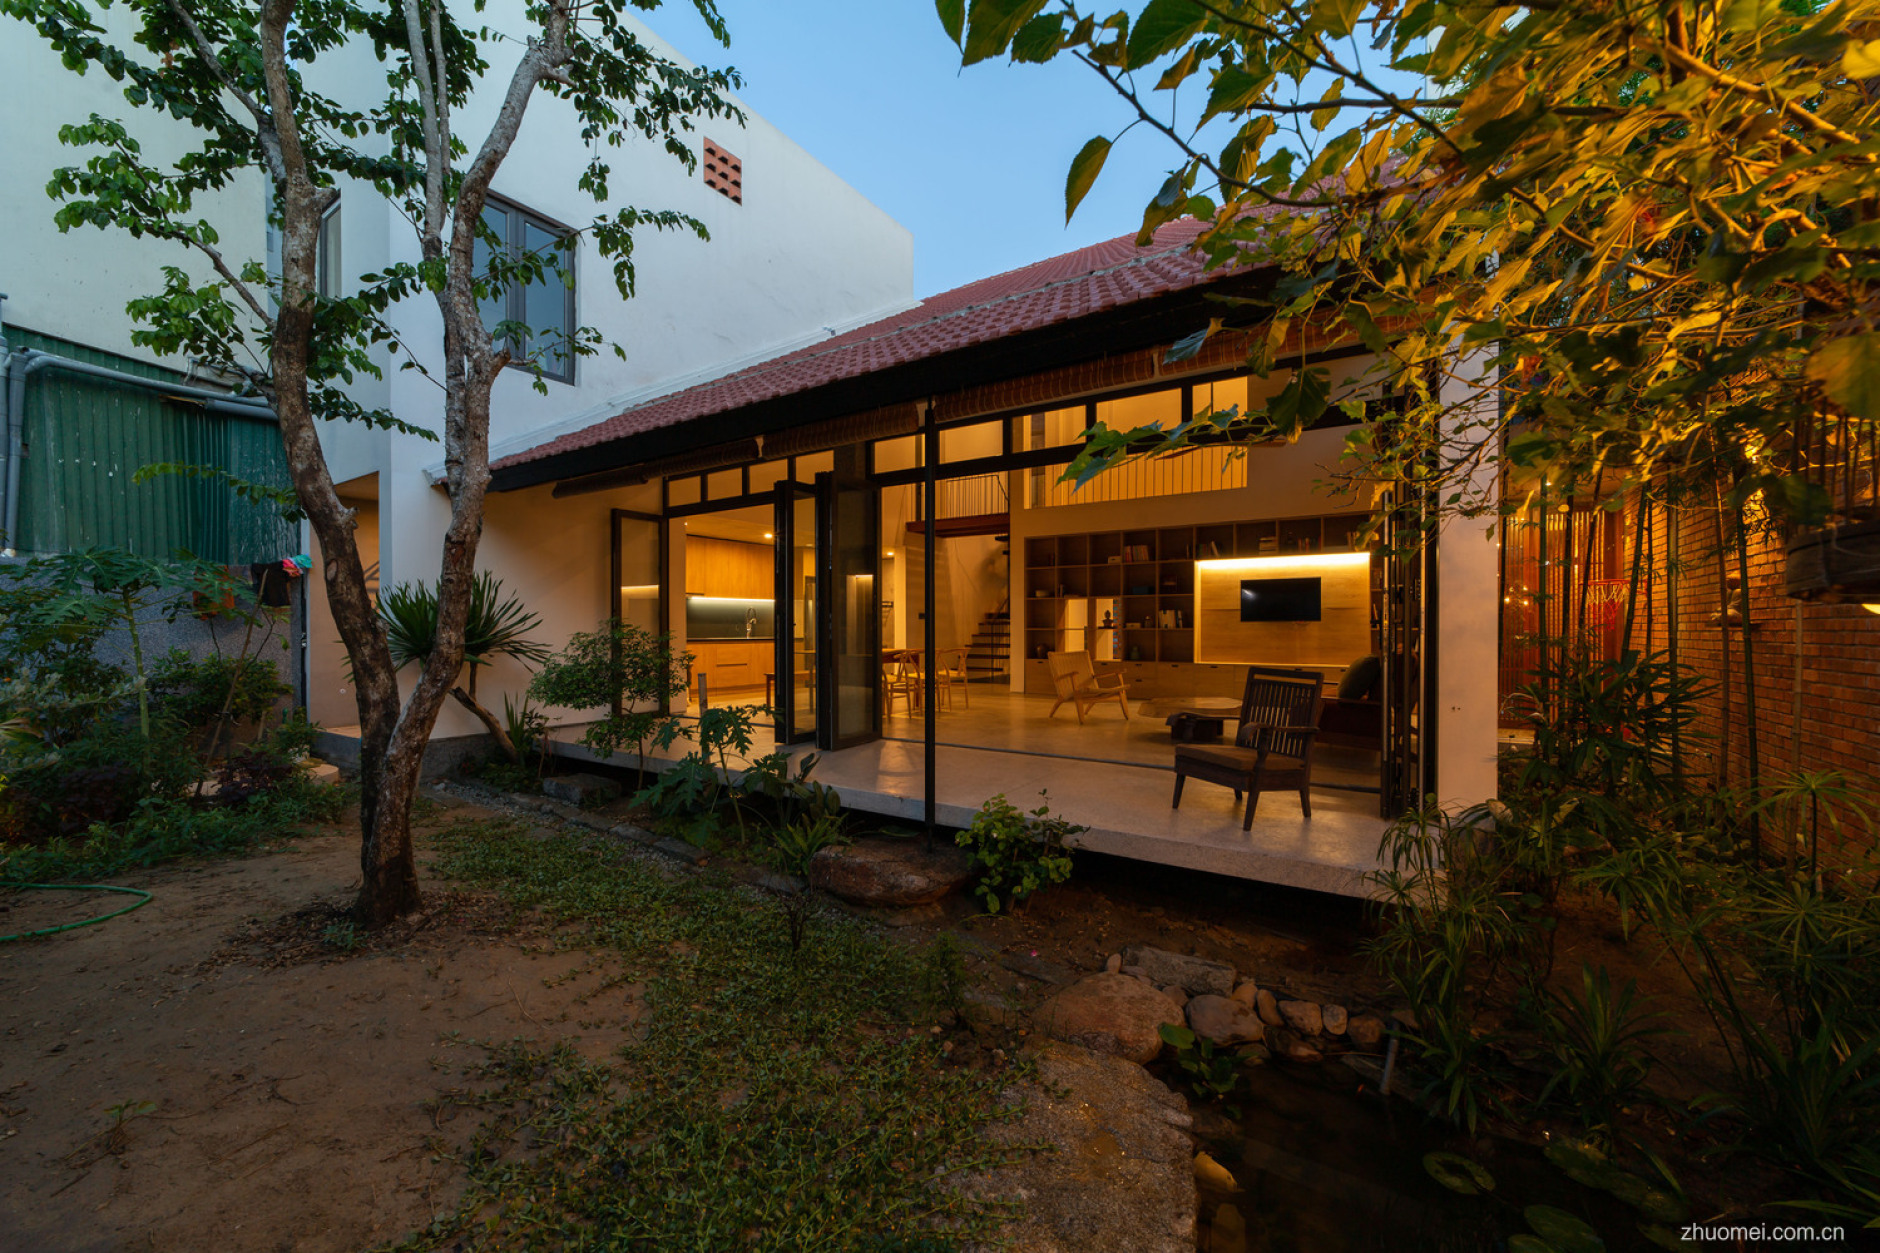 Dom Architect Studio丨The Tiamo House丨越南-28